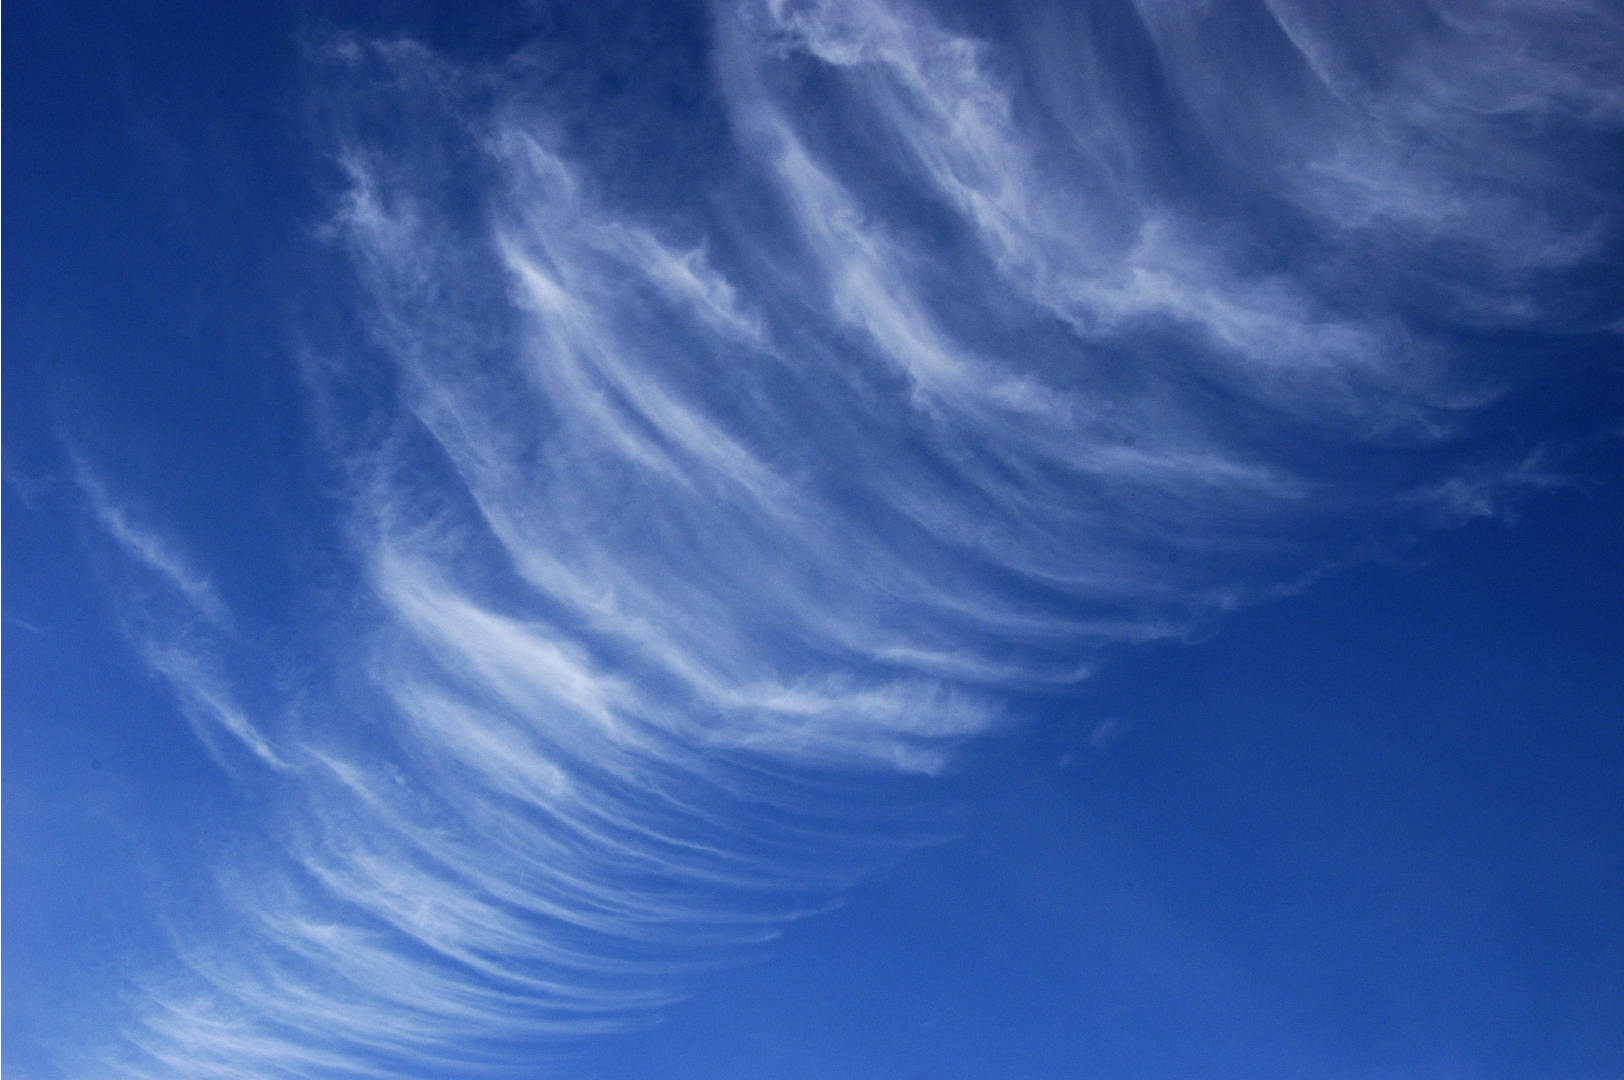 Image of cirrus clouds